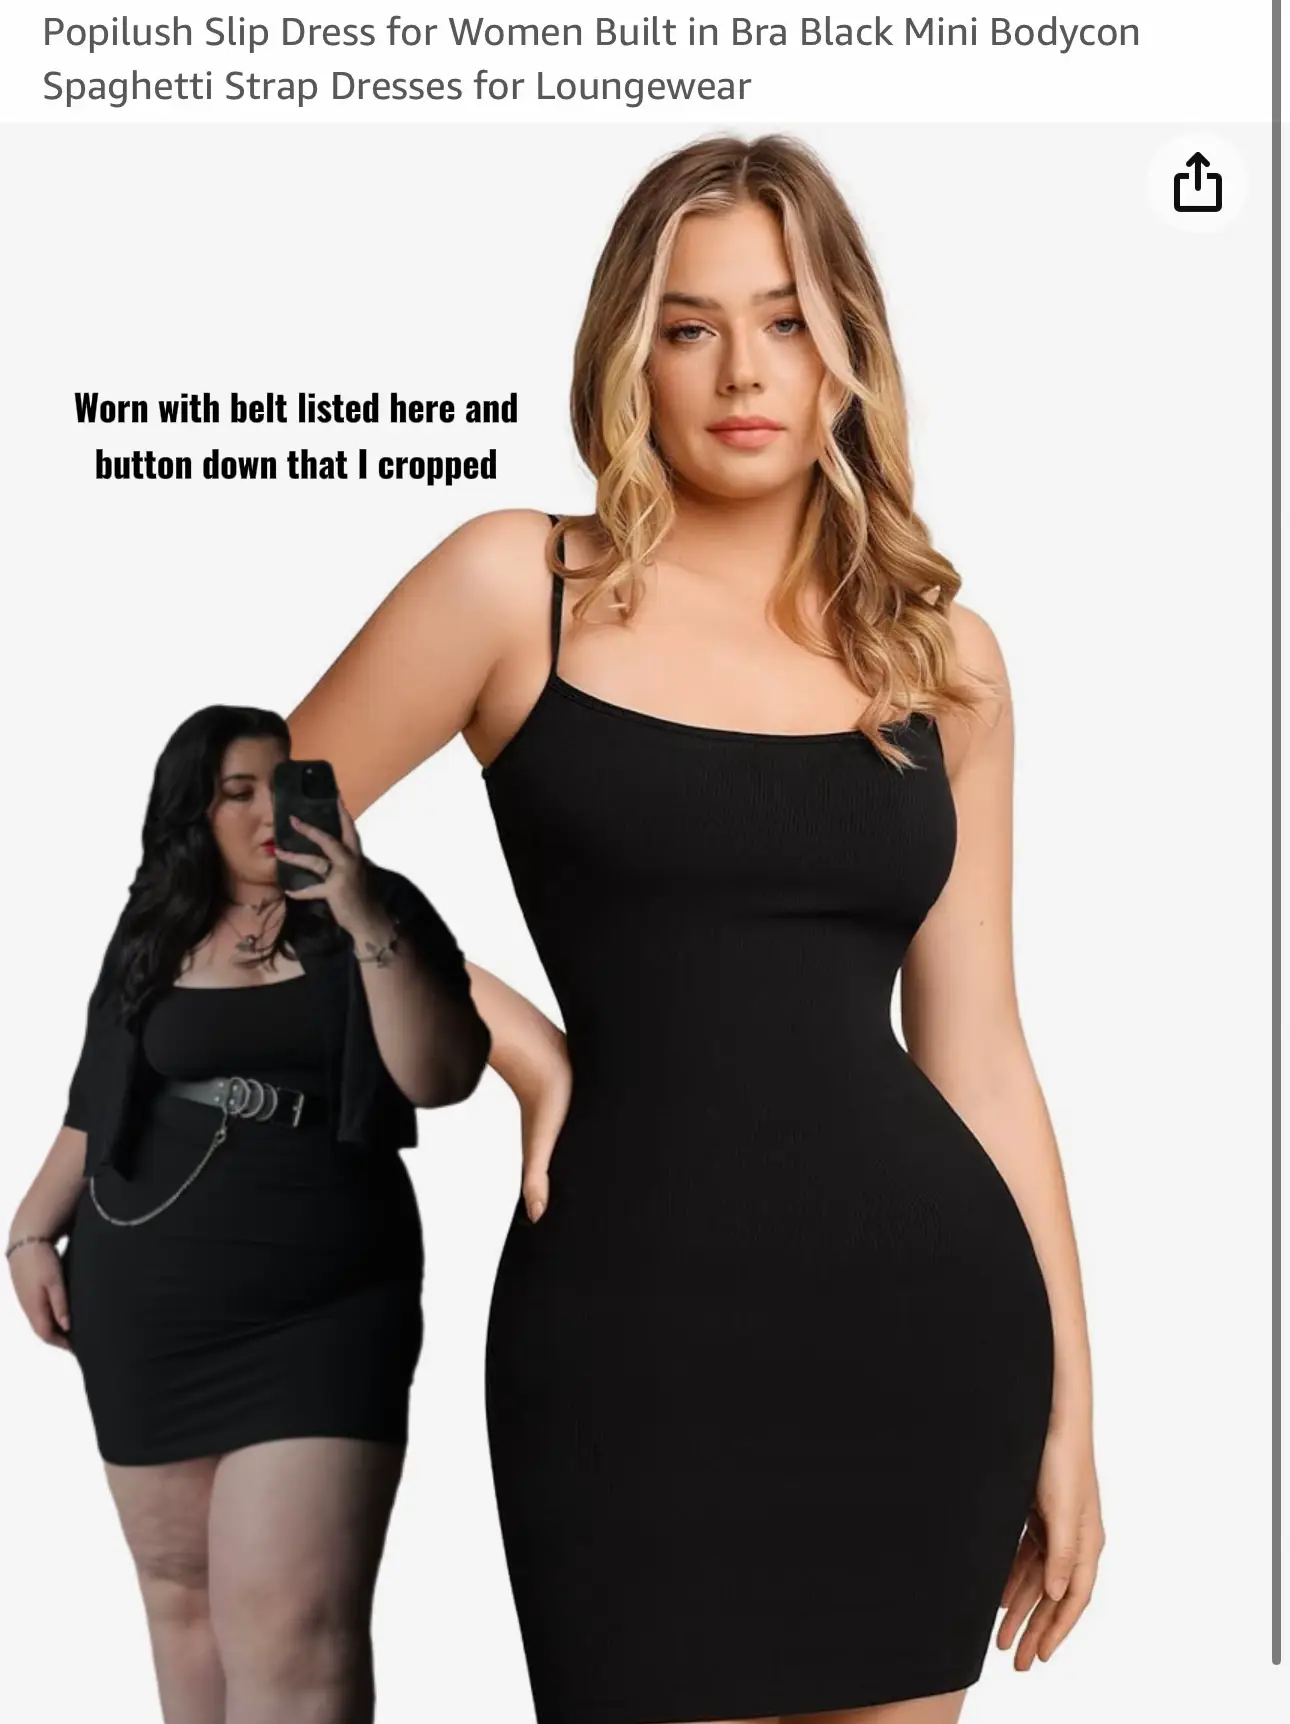 Buy Popilush Shaper Dress Bodycon Maxi/Mini Built in Shapewear Bra 8 in 1  Women Lounge Long/Short Slip Dresses, Grey-maxi Dress, Large at